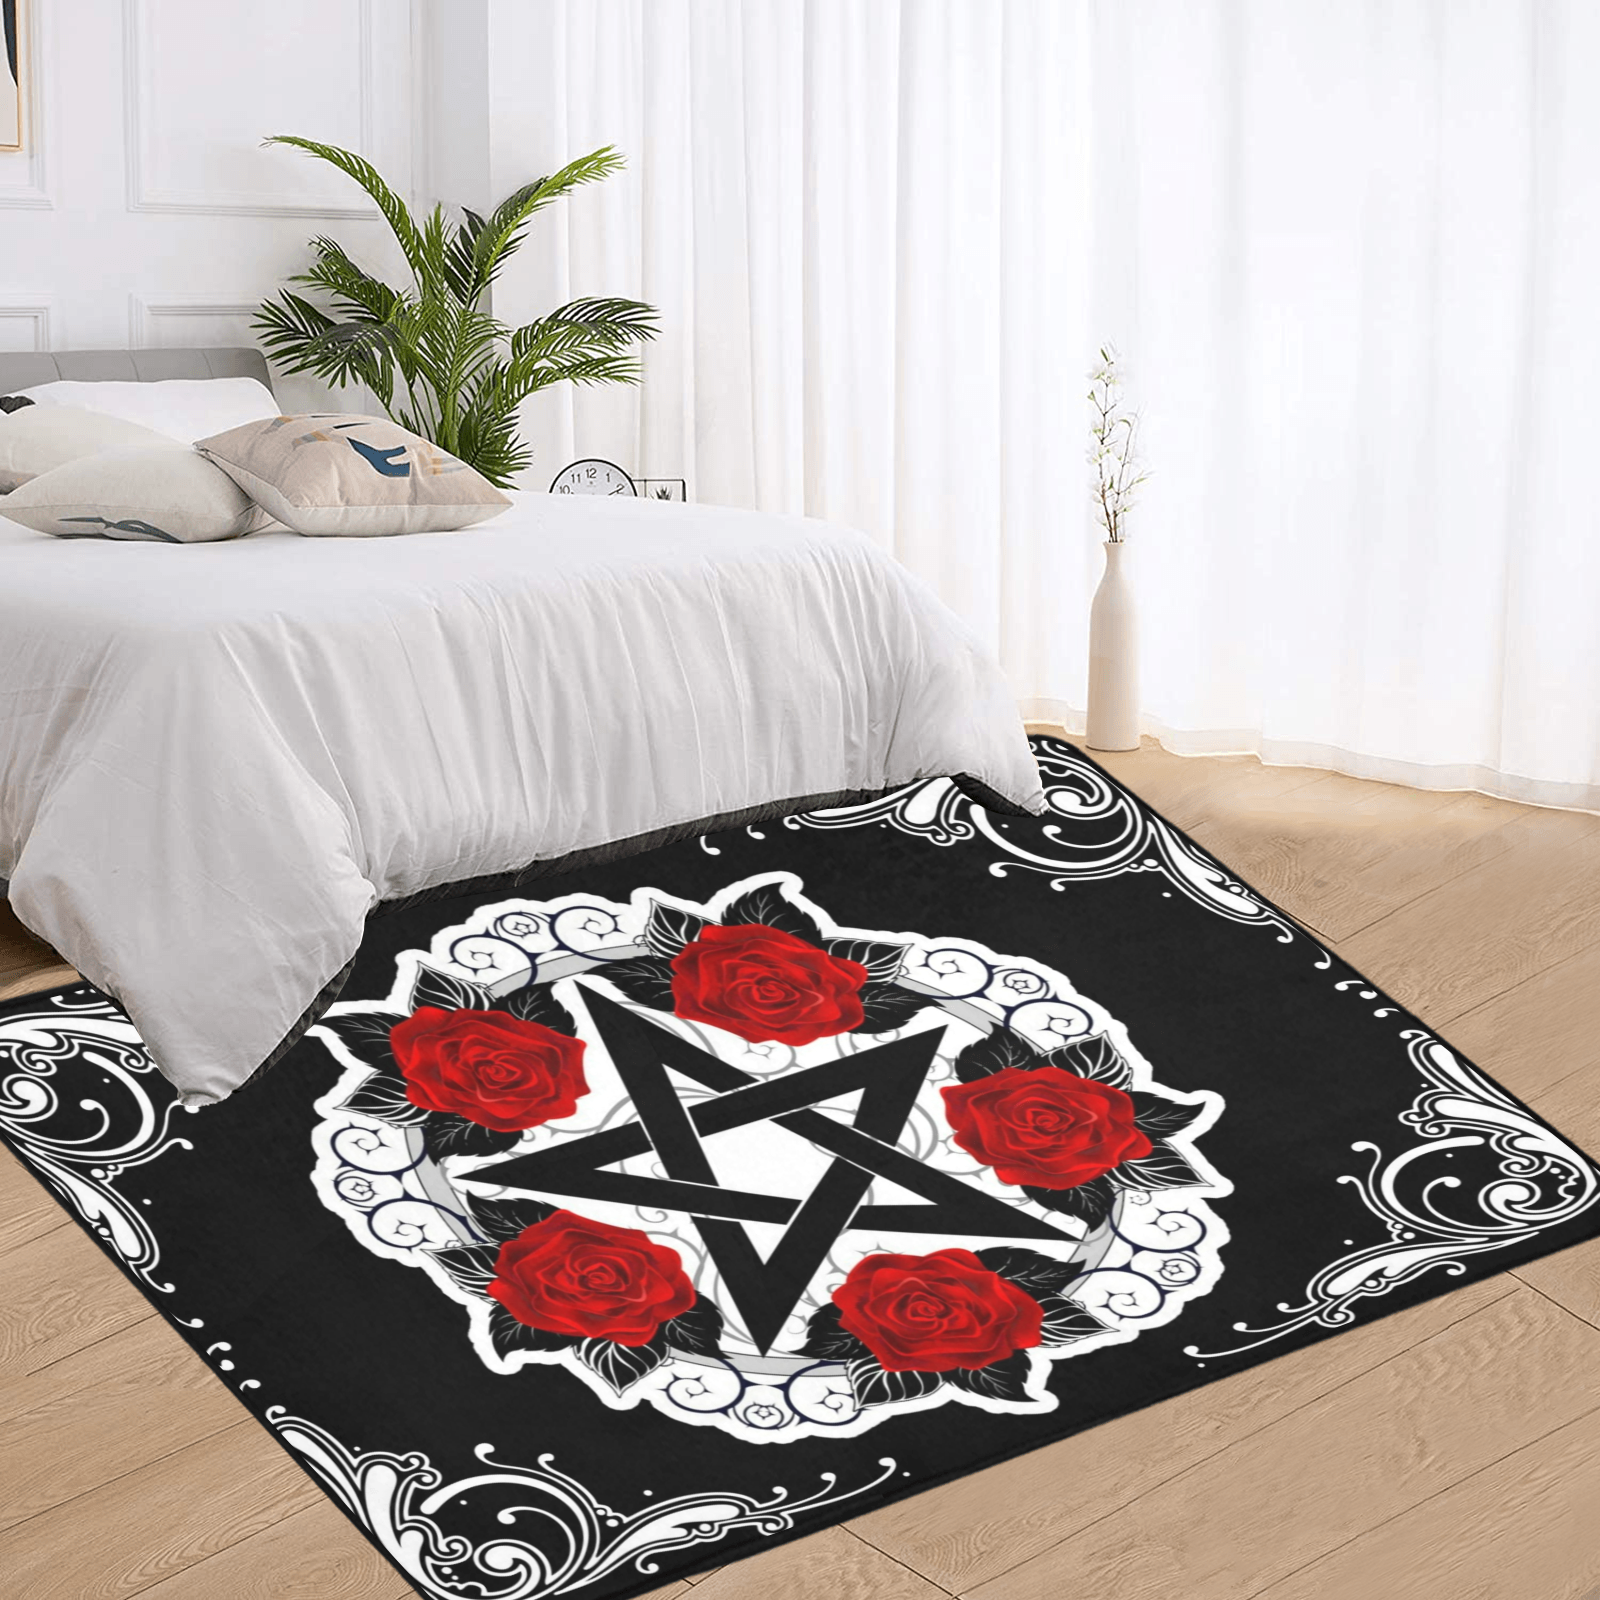 Wicca pentagram area rug Gothic rug-MoonChildWorld